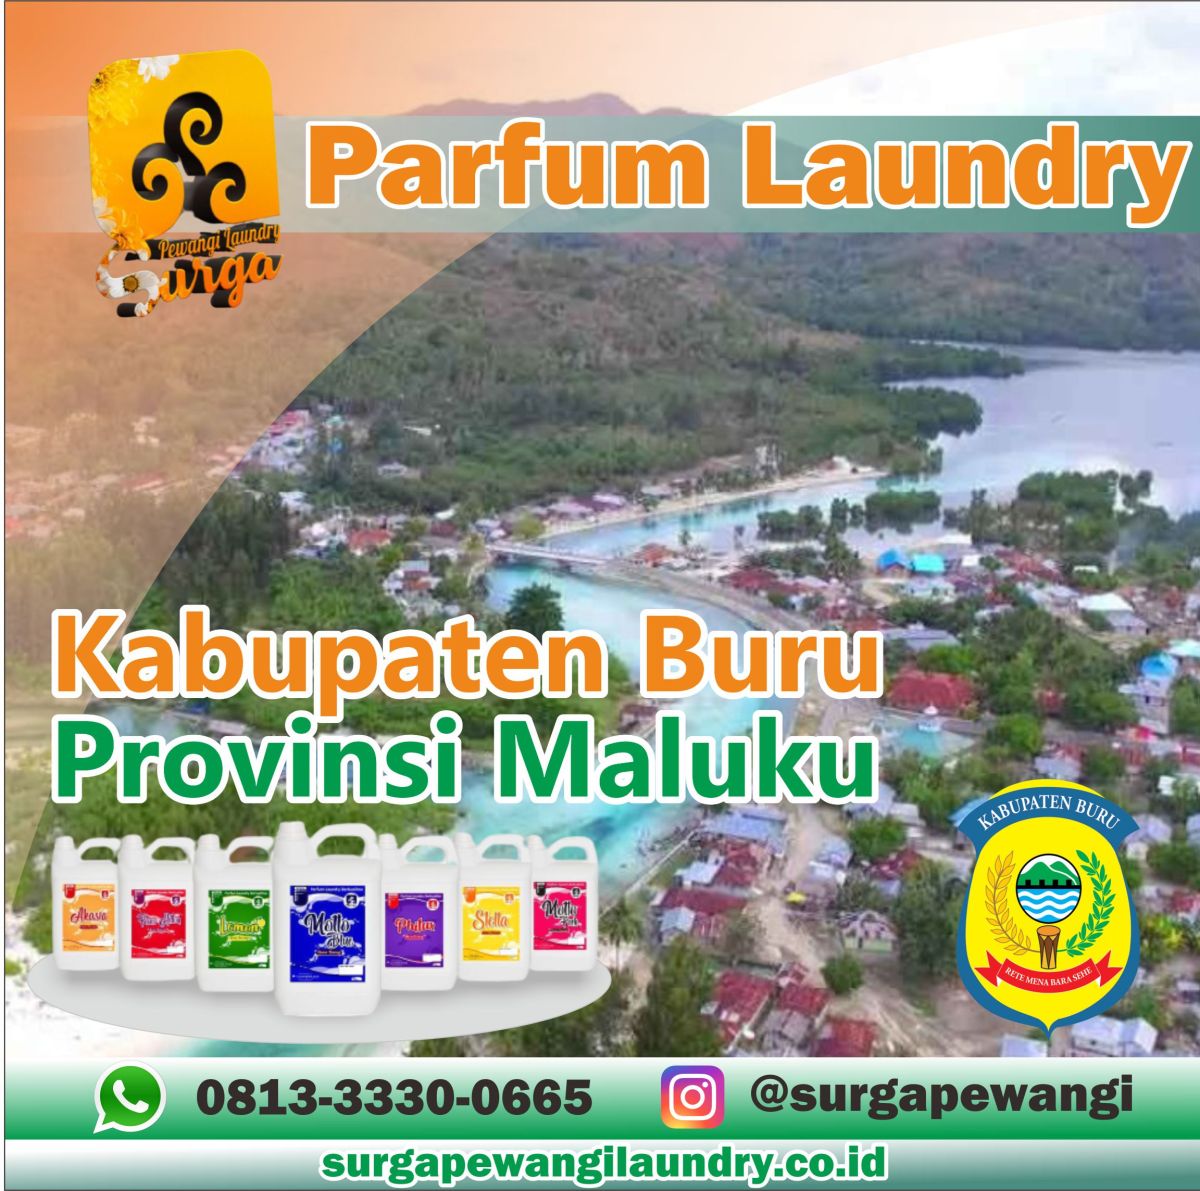 Parfum Laundry Kabupaten Buru, Maluku